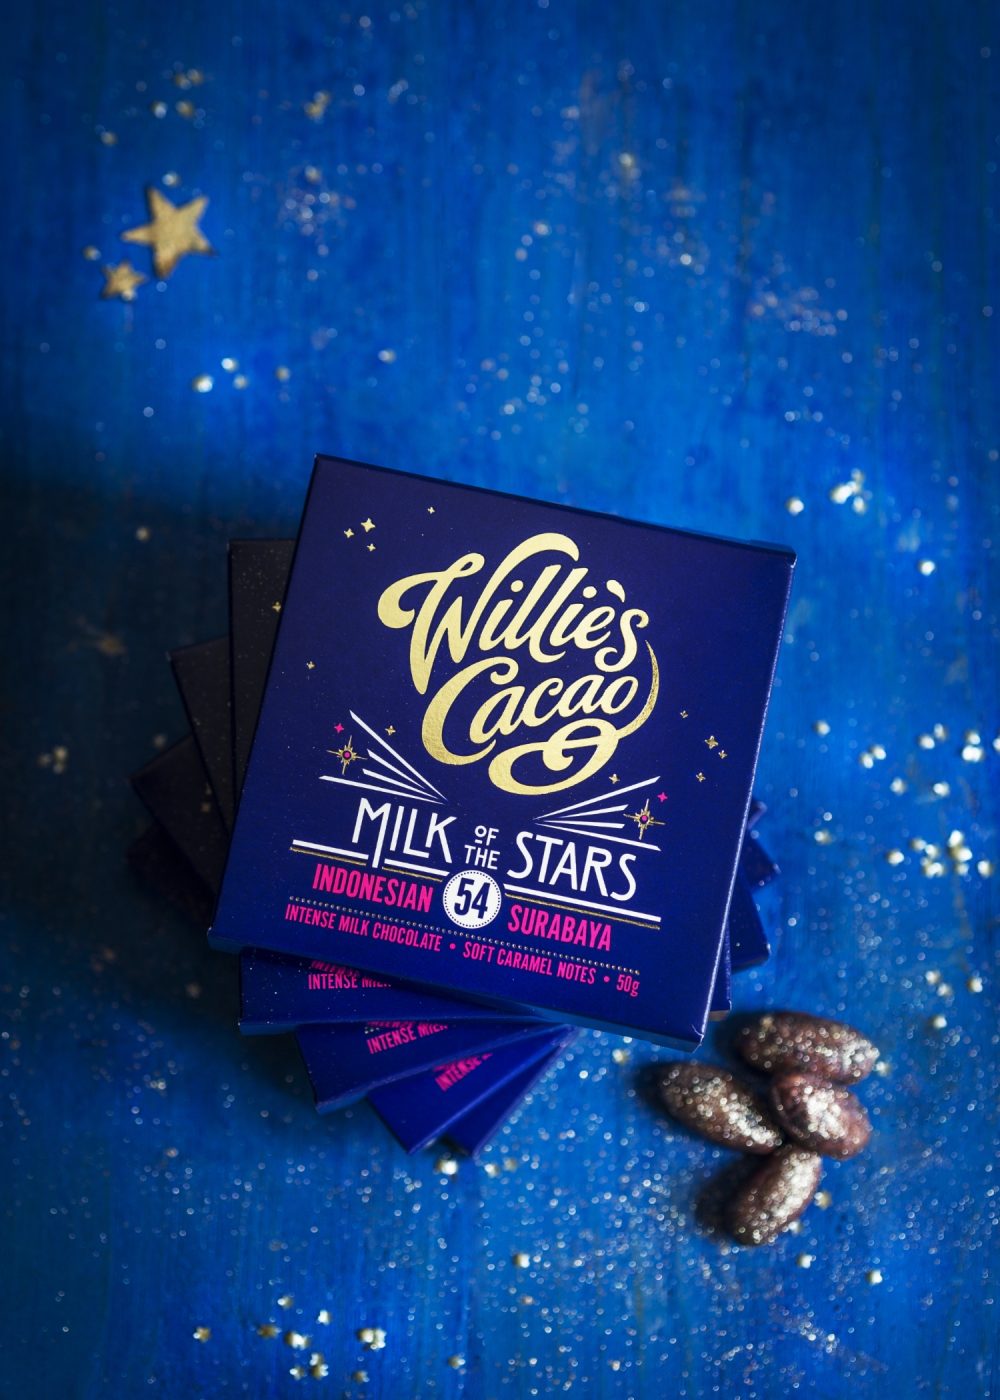 Willie's Cacao Milk of the Stars 54% Milk Chocolate Bar Aesthetic